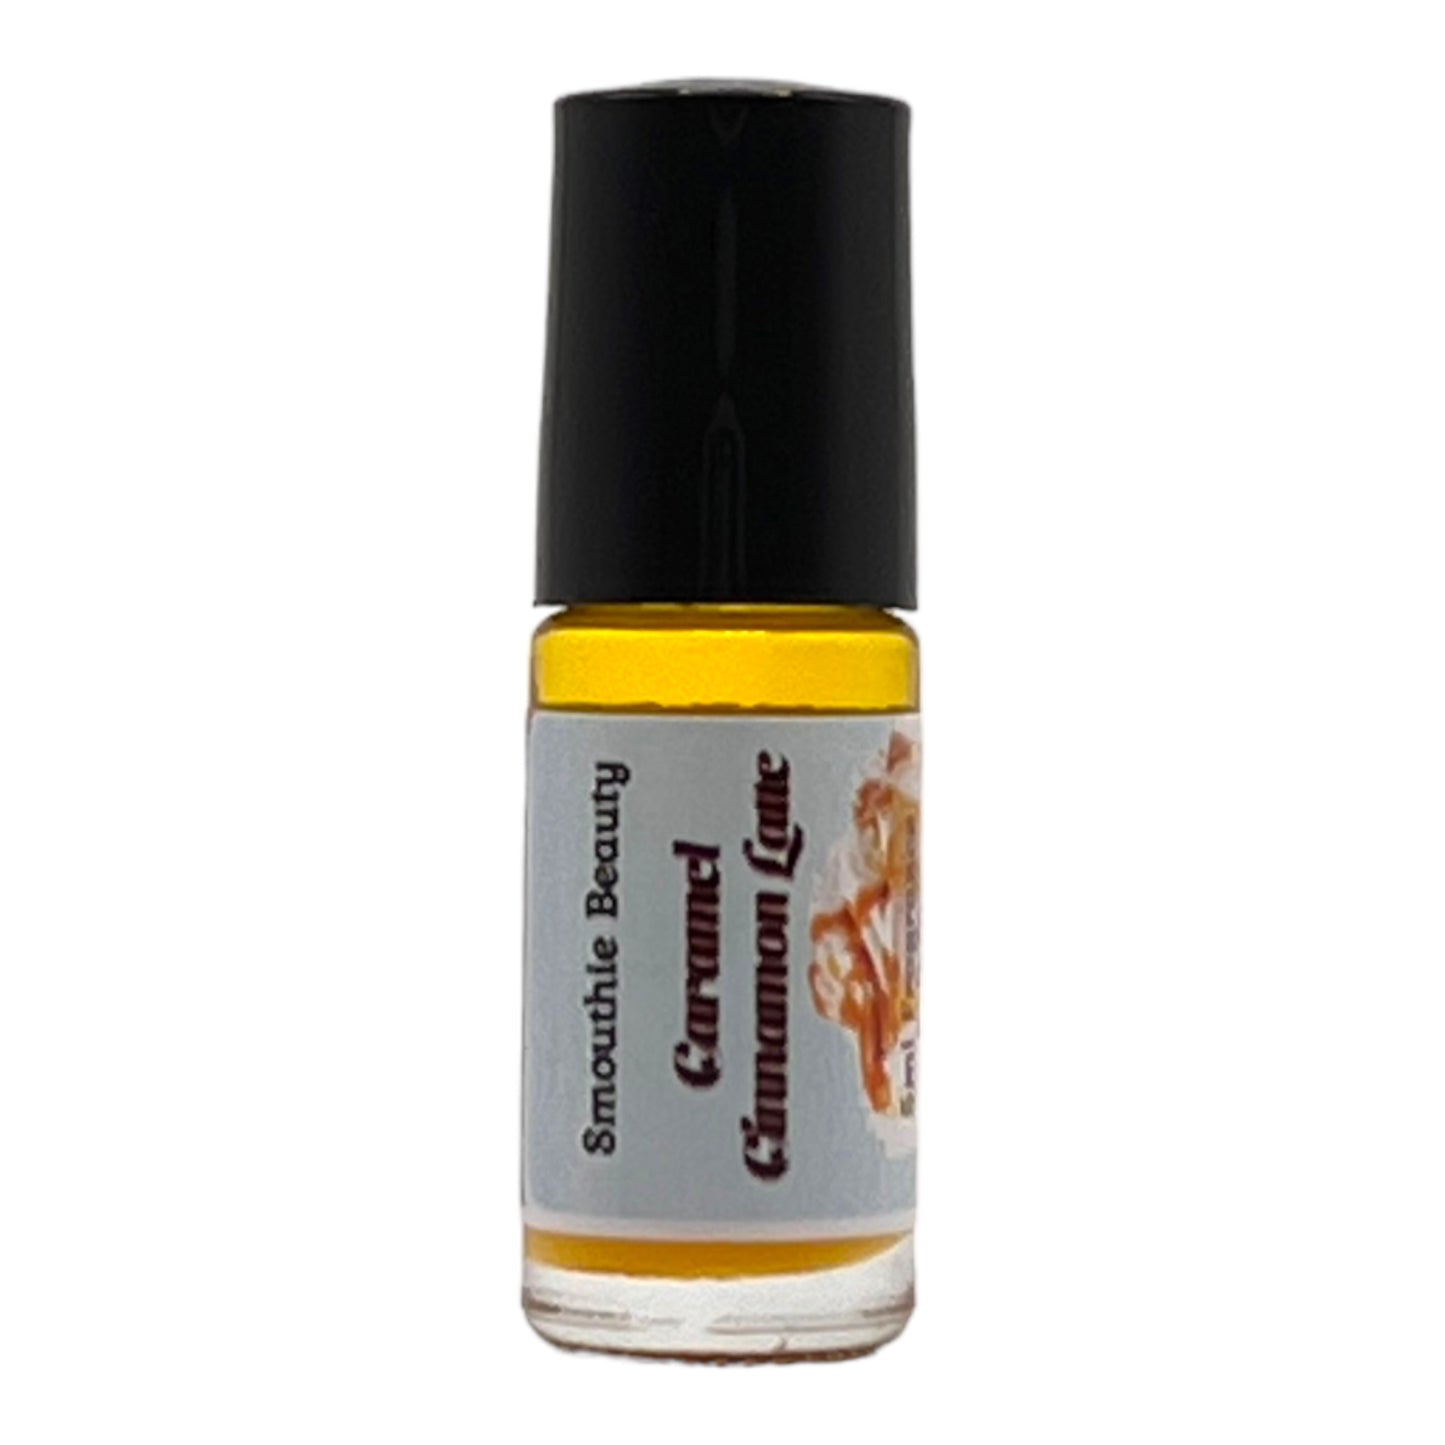 Caramel Cinnamon Latte Perfume Oil Fragrance Roll On